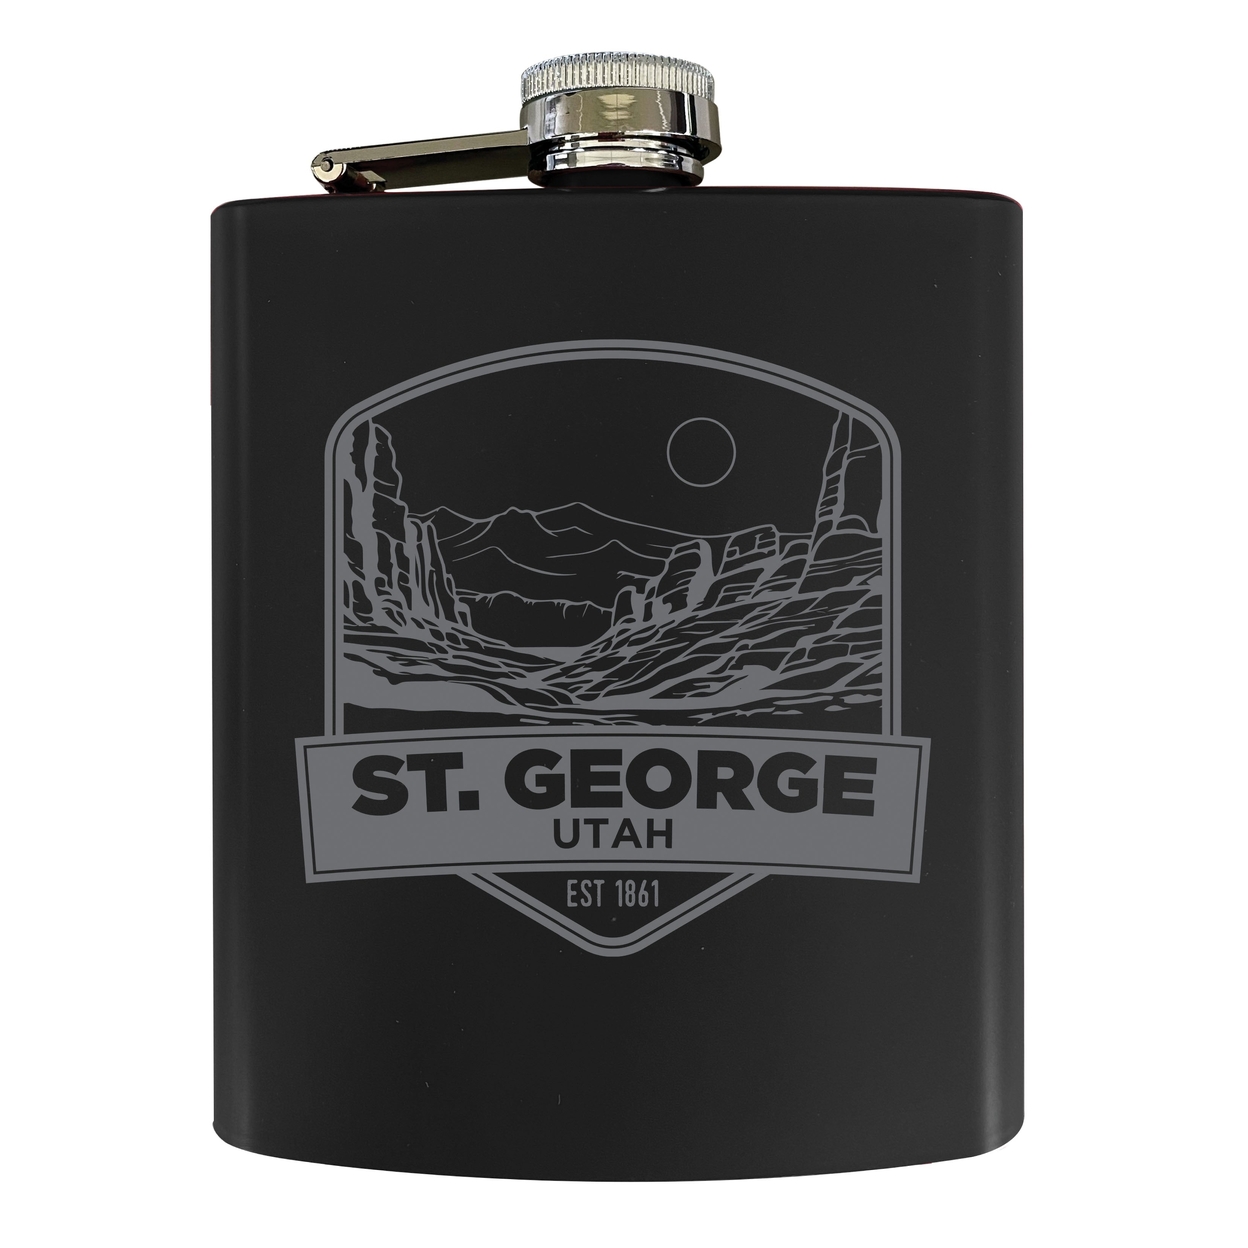 St. George Utah Souvenir 7 Oz Engraved Steel Flask Matte Finish - Black,,Single Unit